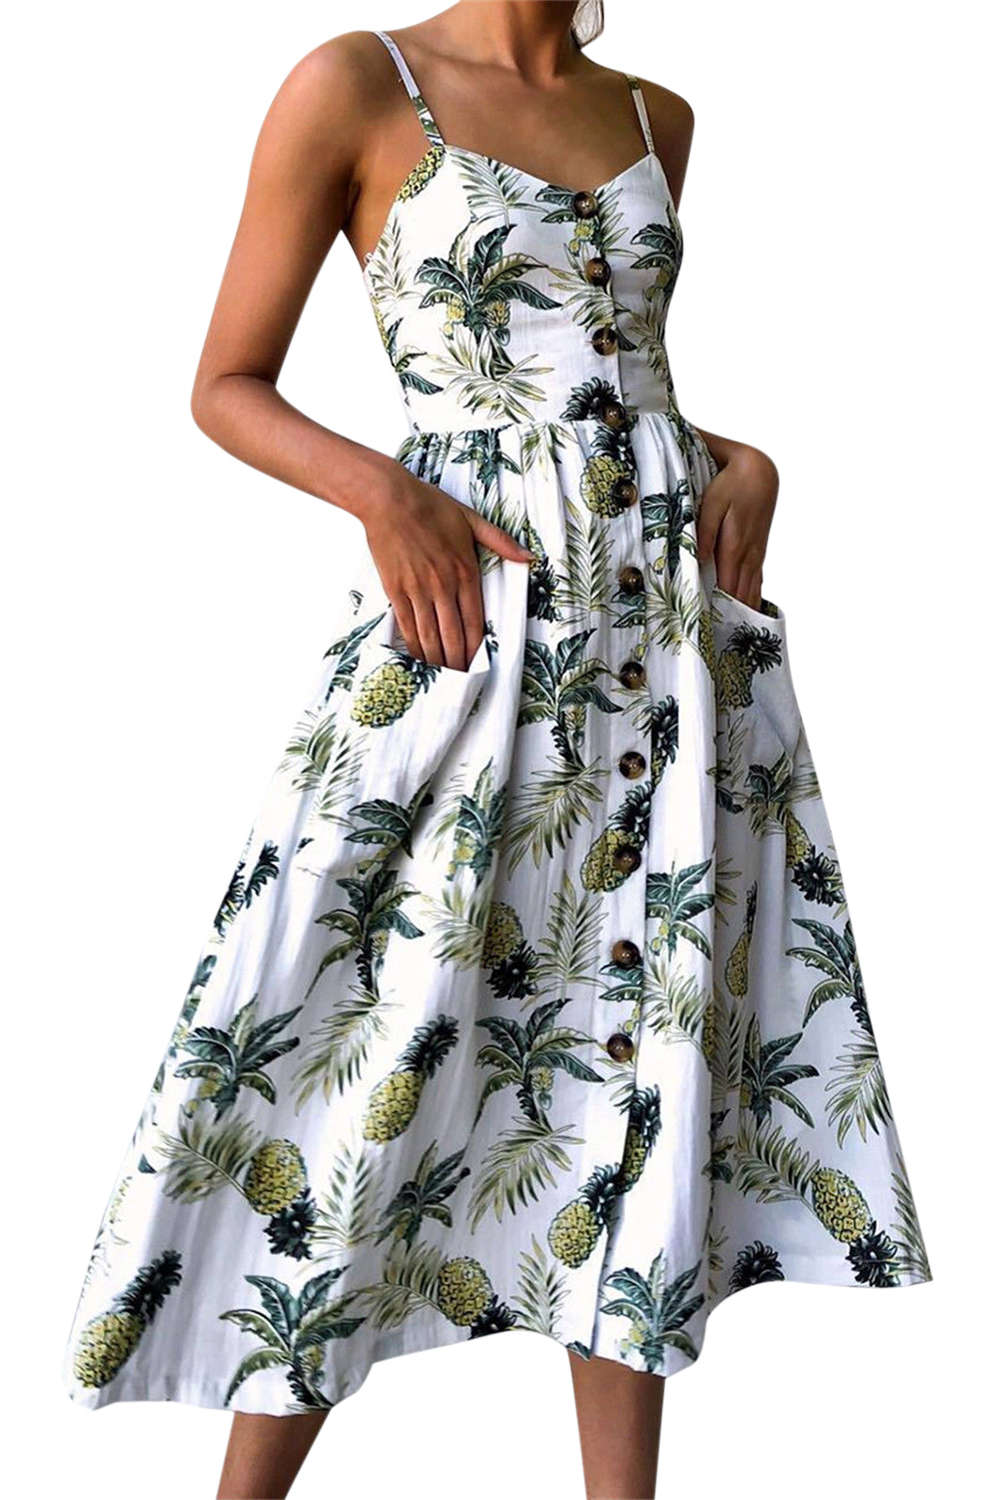 Iyasson Women Floral Print Sling Slip dress